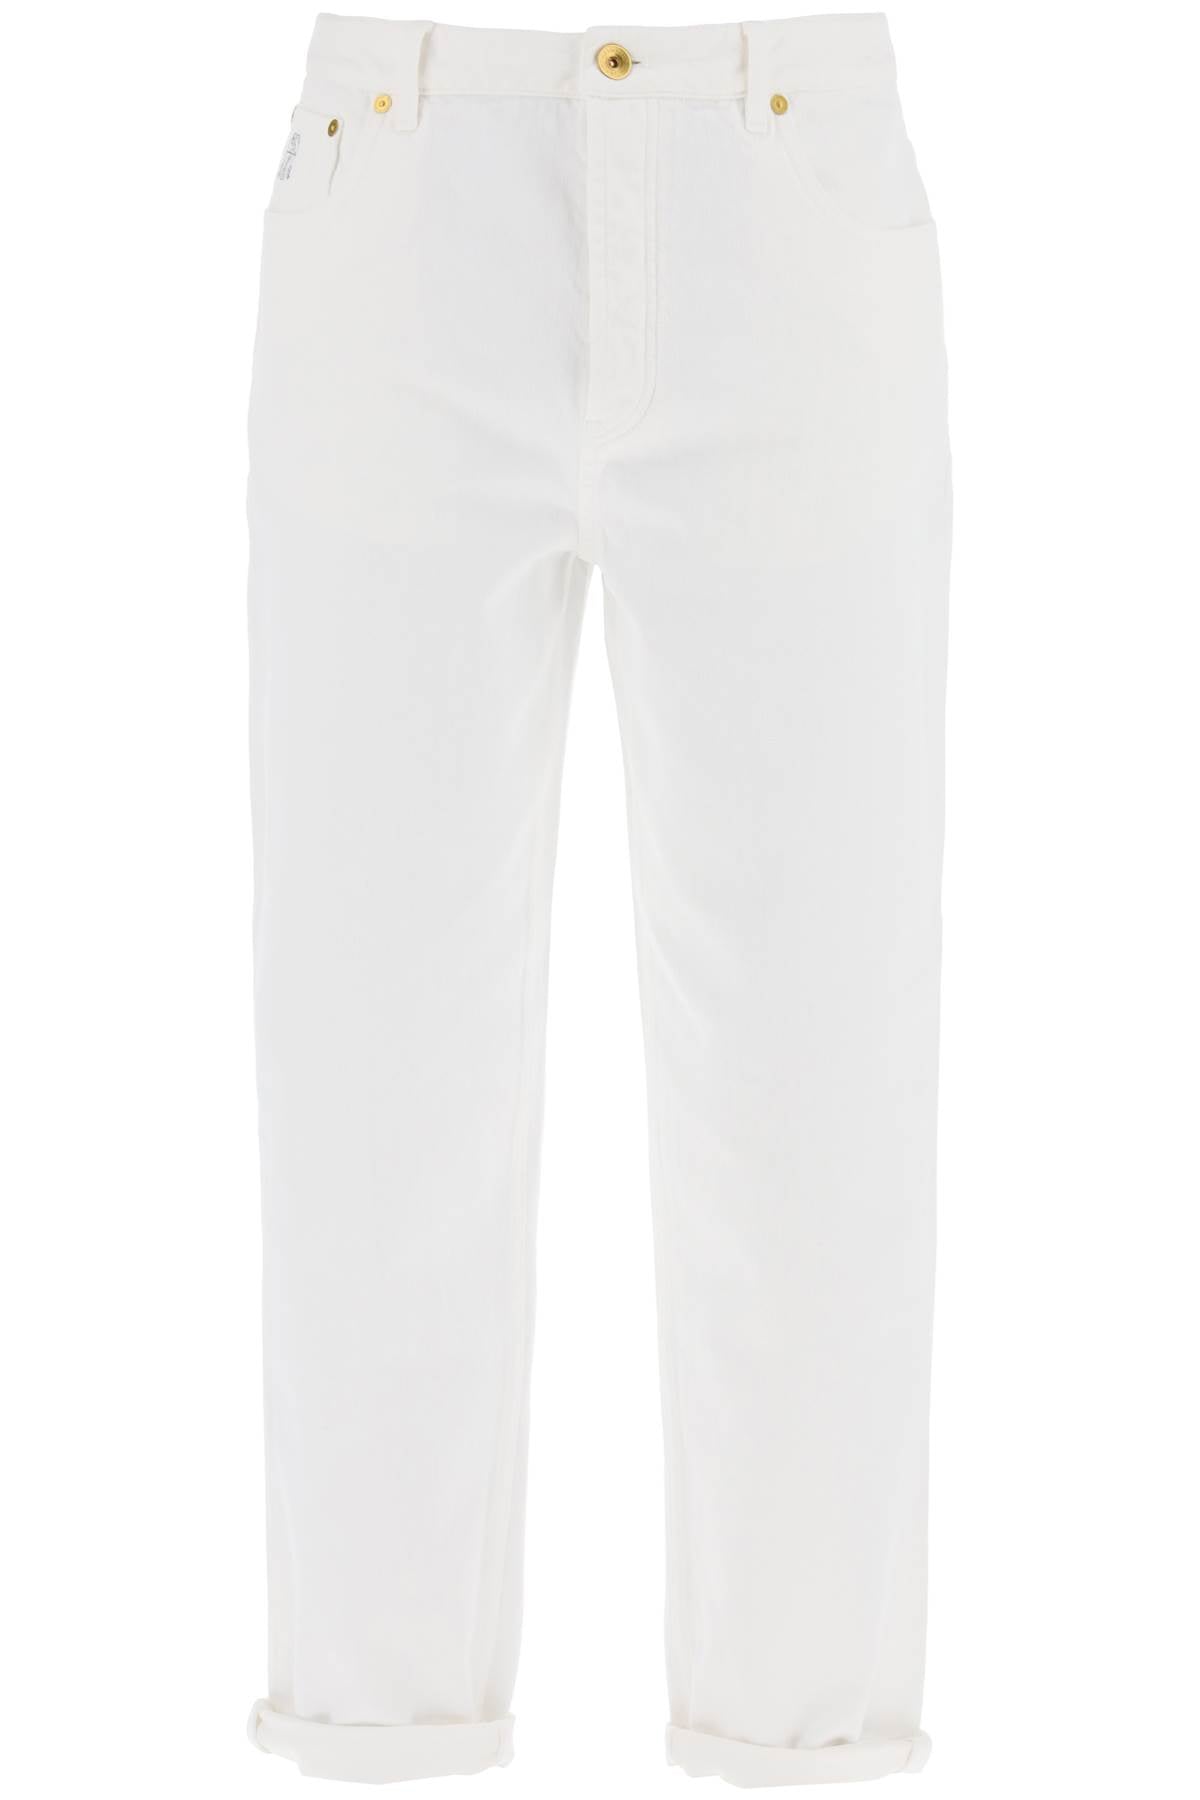 Shop Brunello Cucinelli Men's Overdyed Denim Jeans | Classic Five-pocket Design | Regular Fit | White